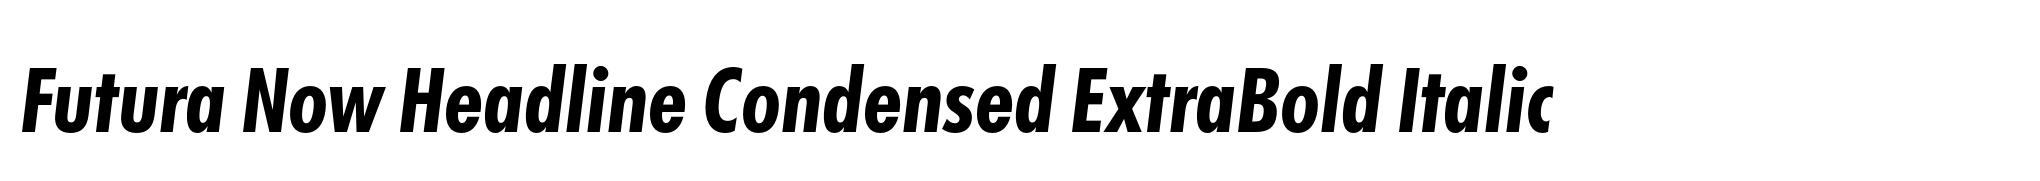 Futura Now Headline Condensed ExtraBold Italic image